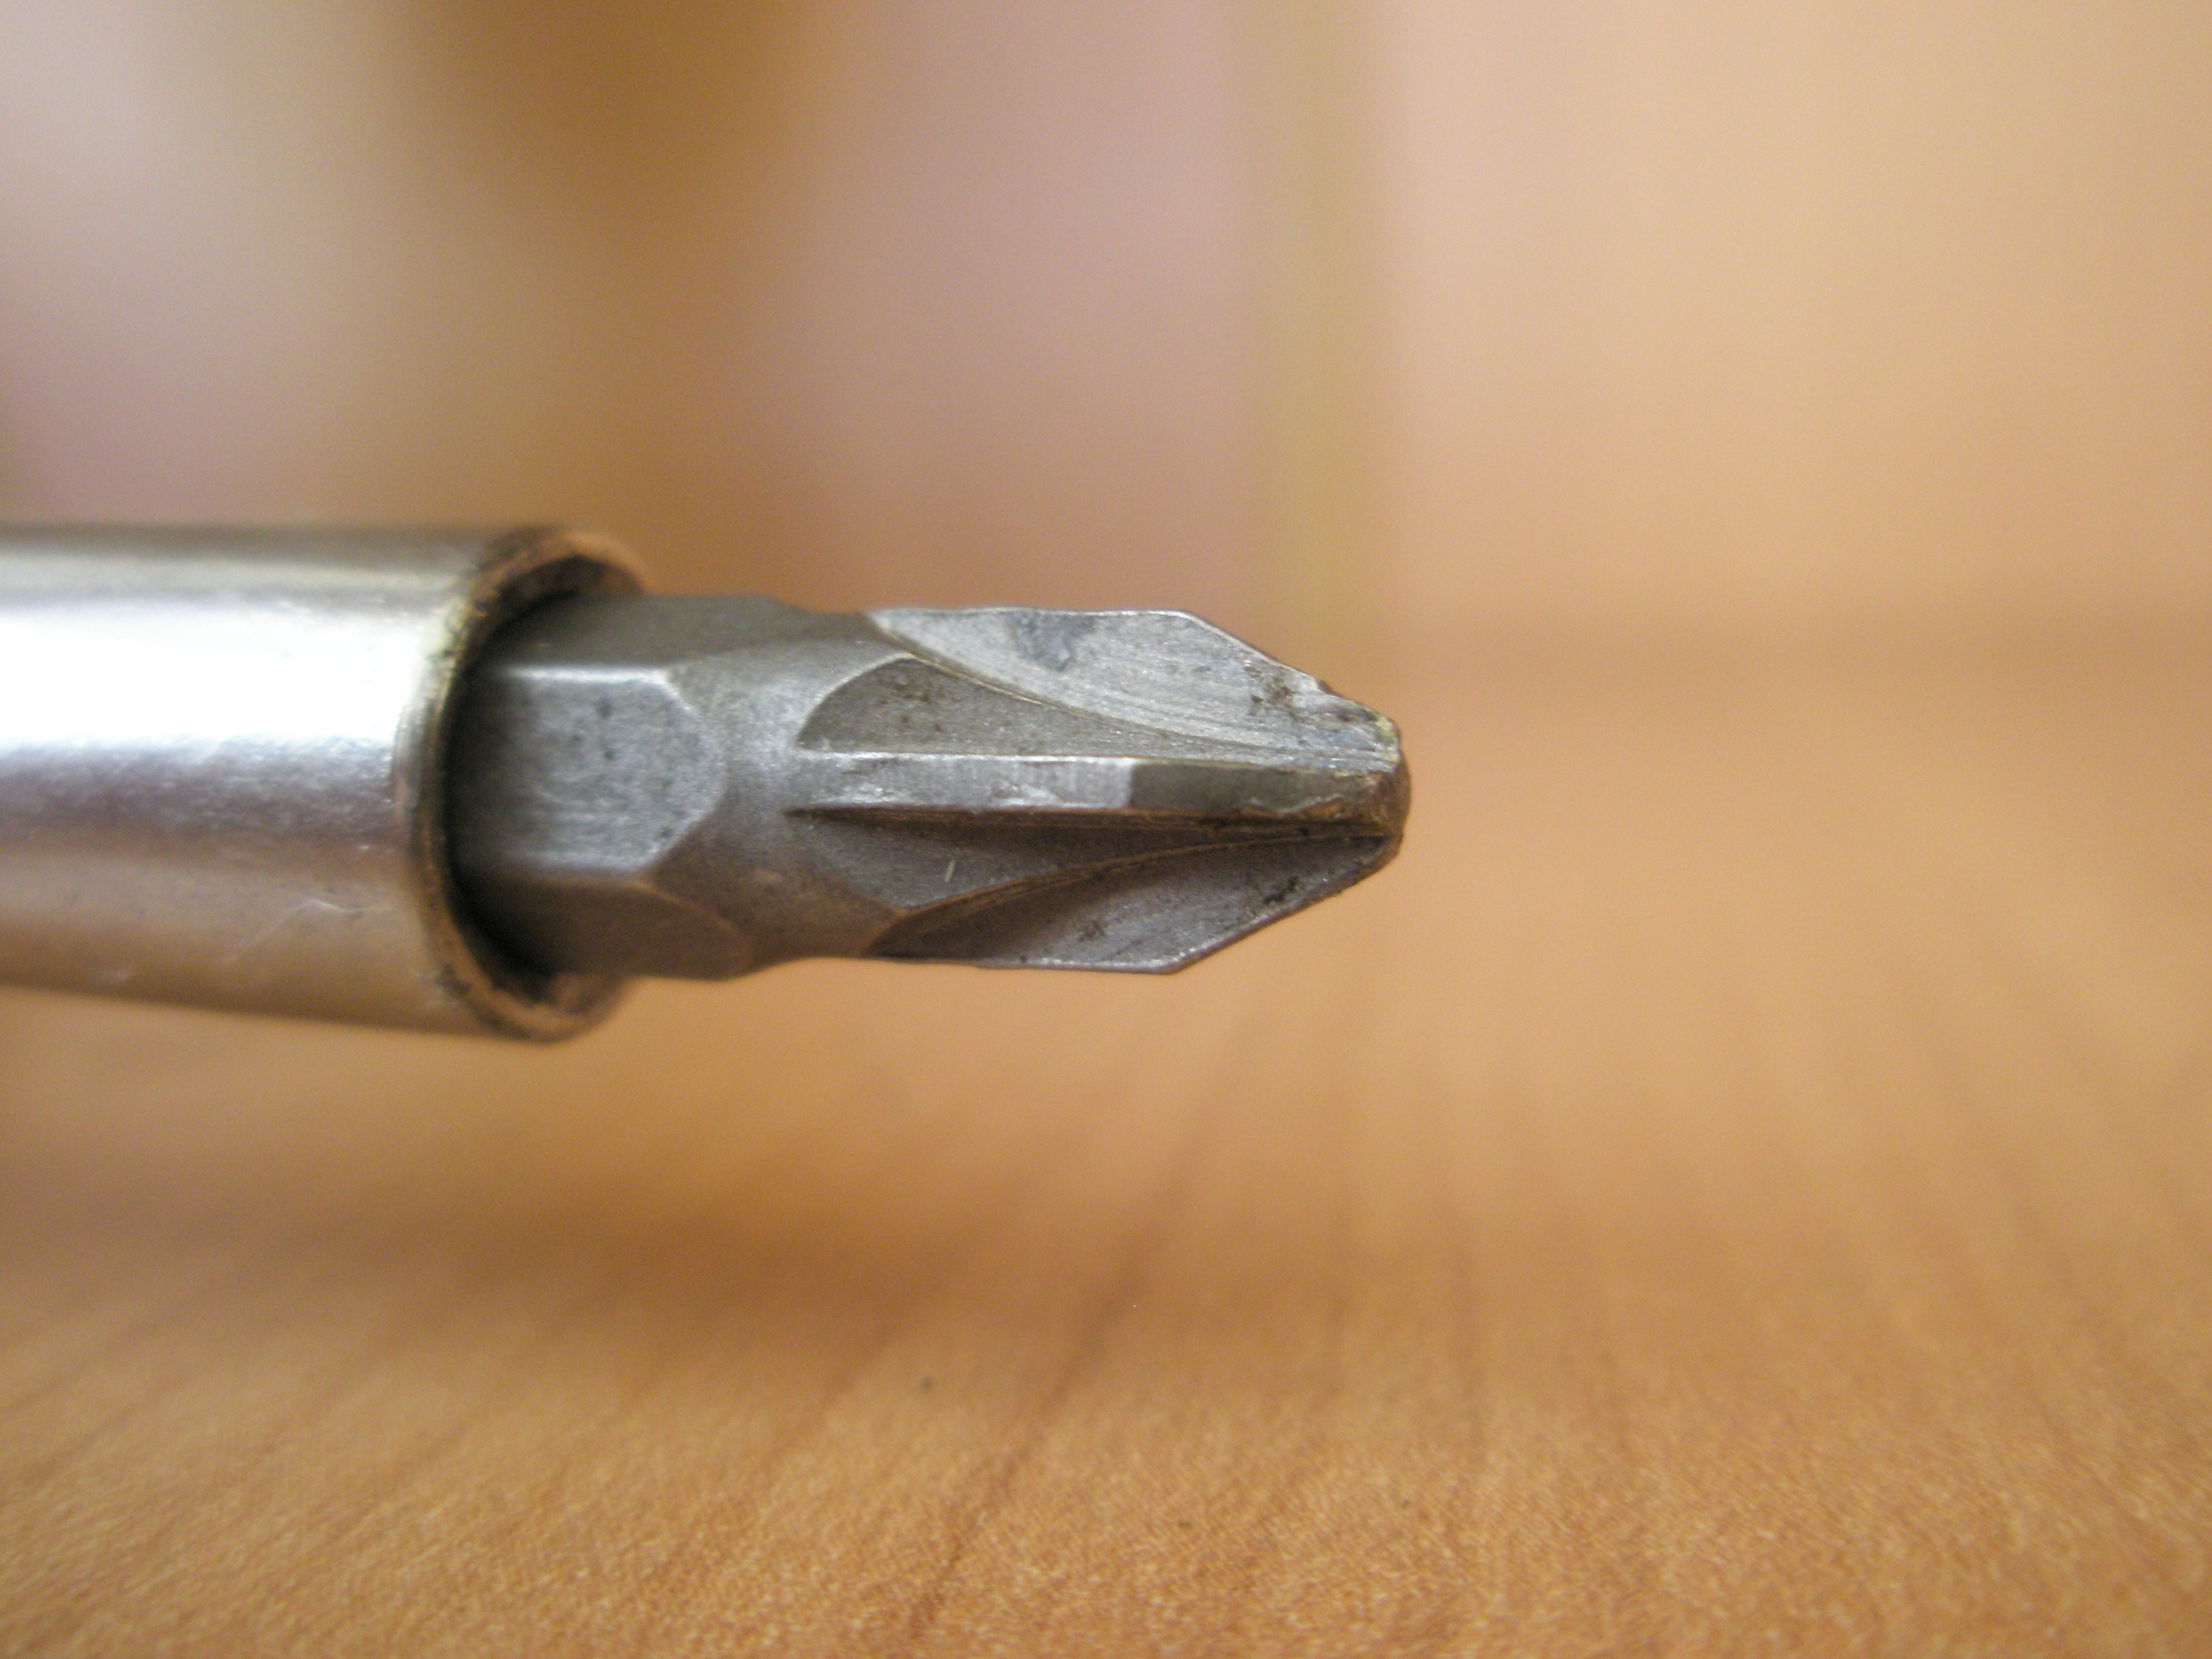 gray screwdriver